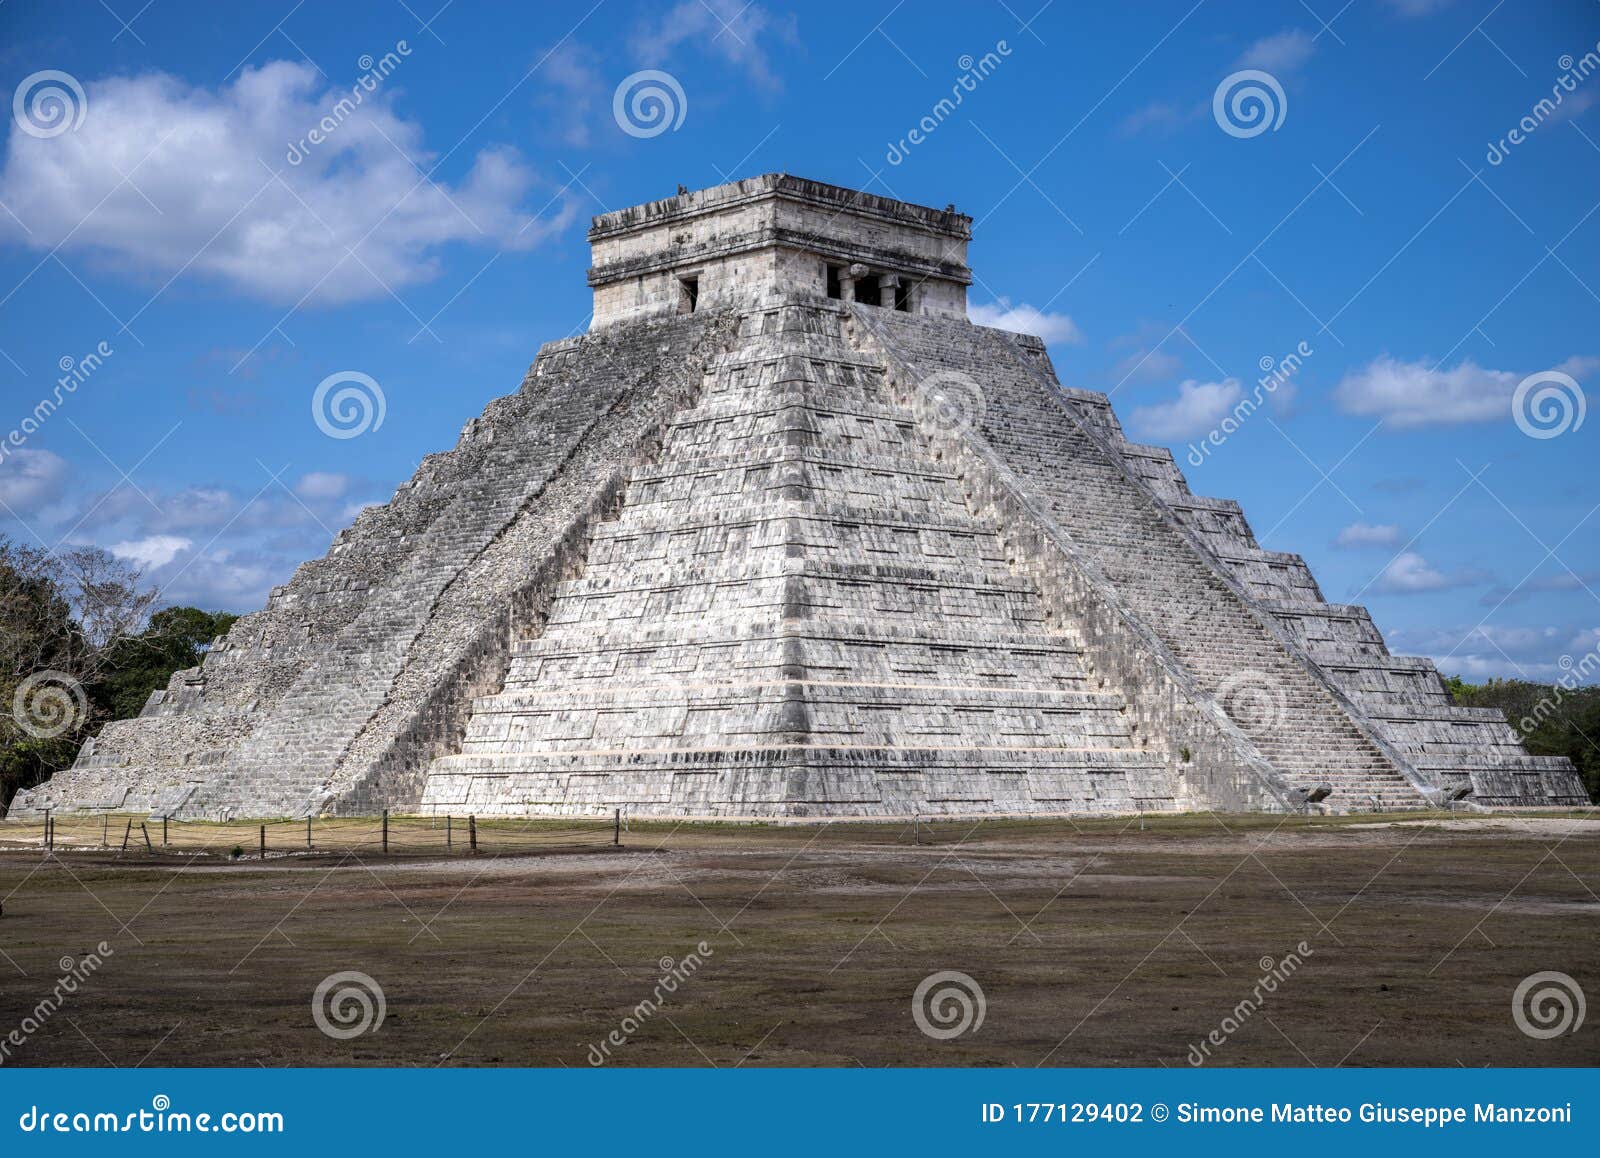 mayan pyramid at chichen itza, yucatÃÂ¡n state, mexico